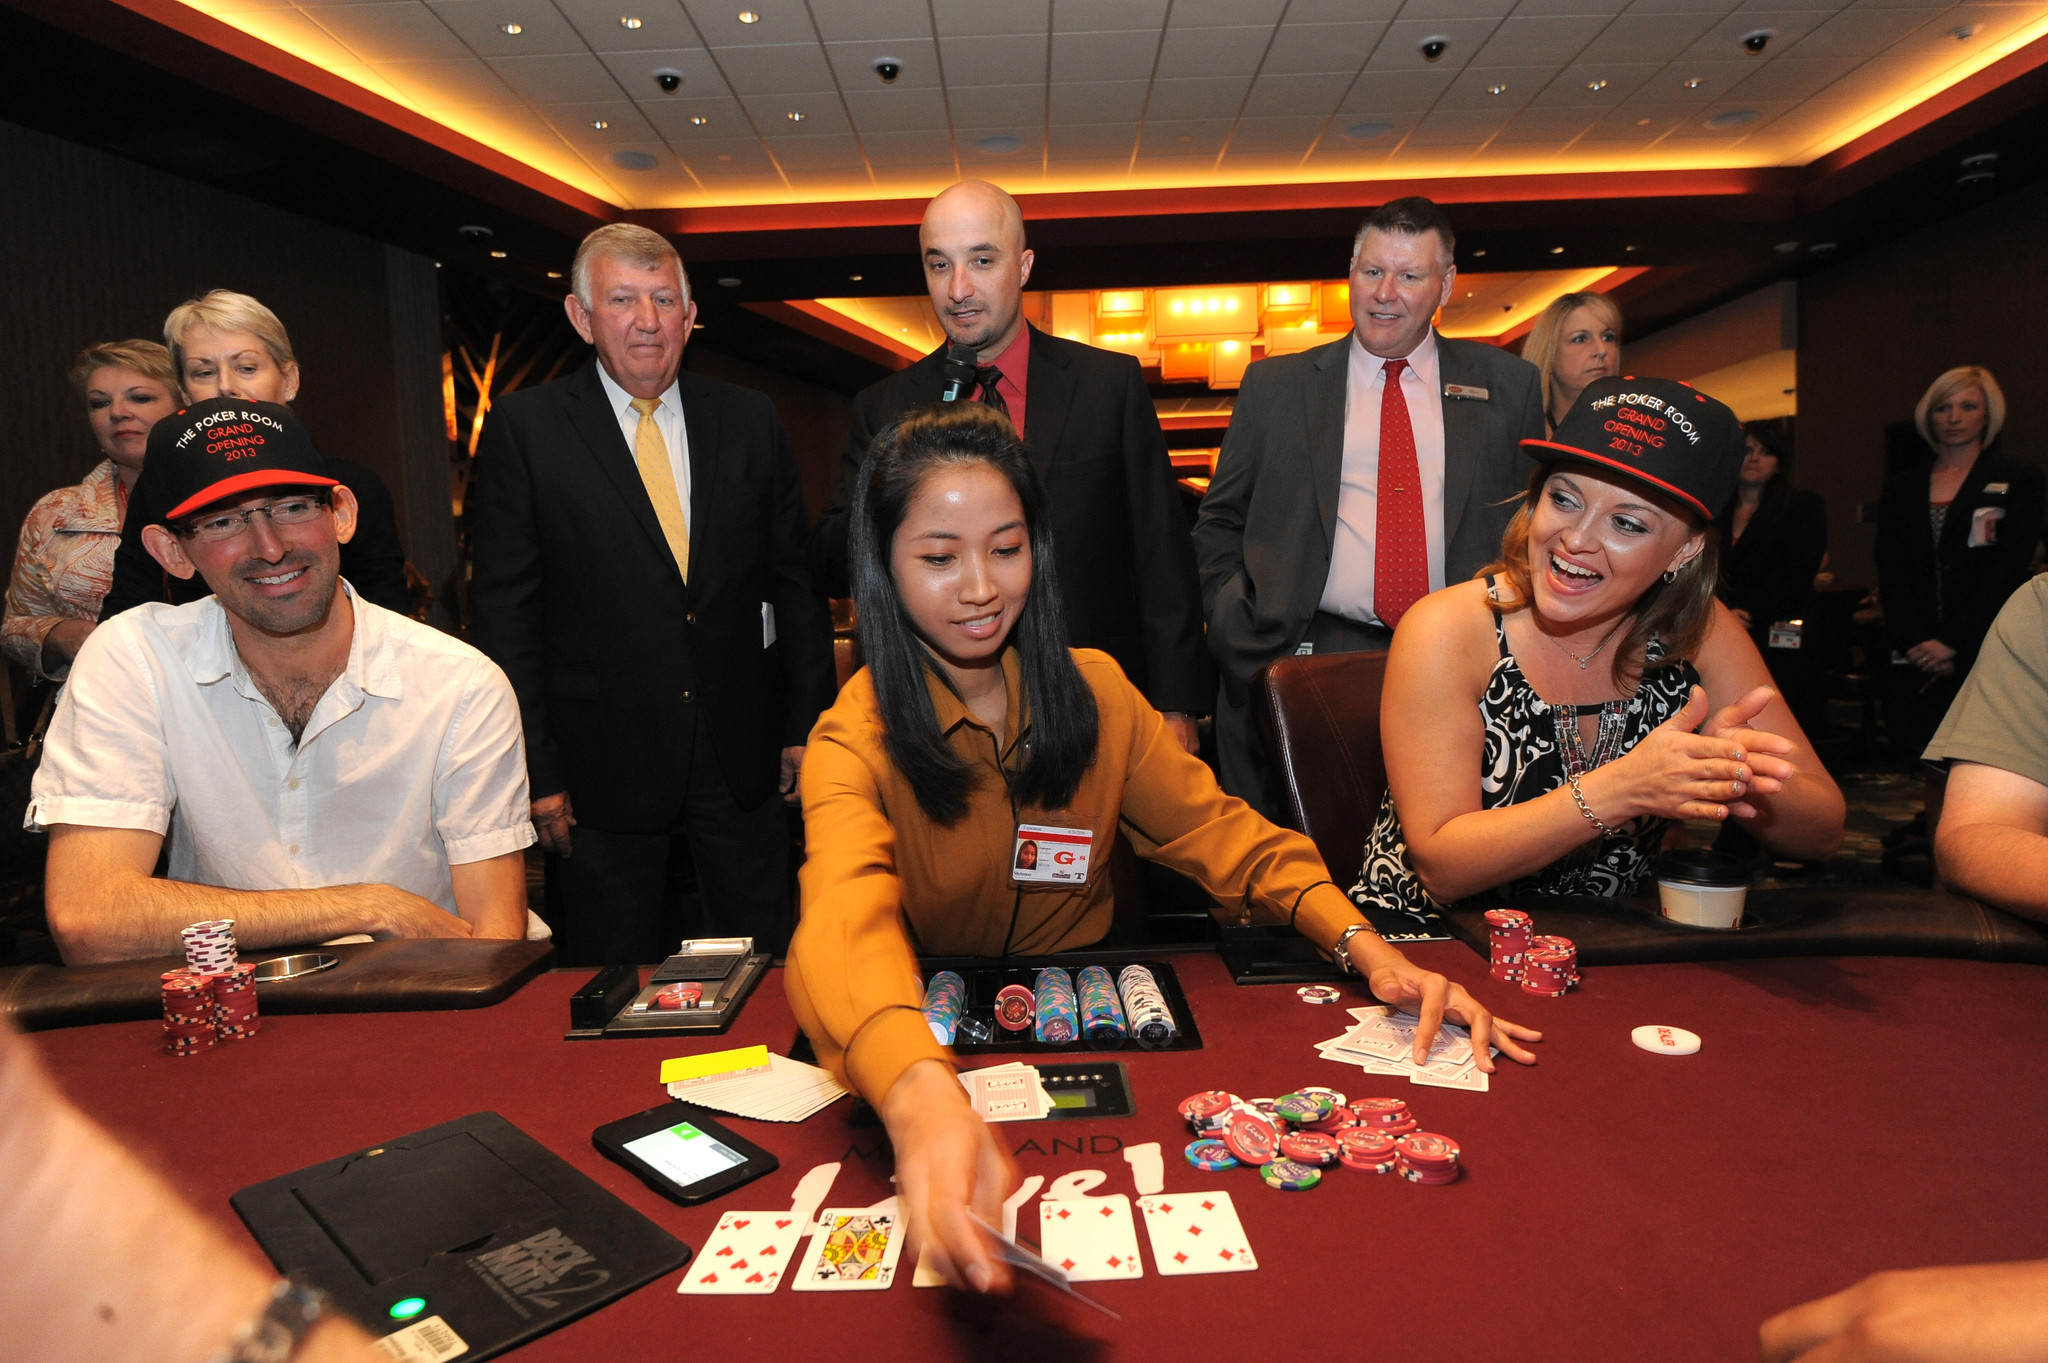 Online slots gain more popularity under casino games